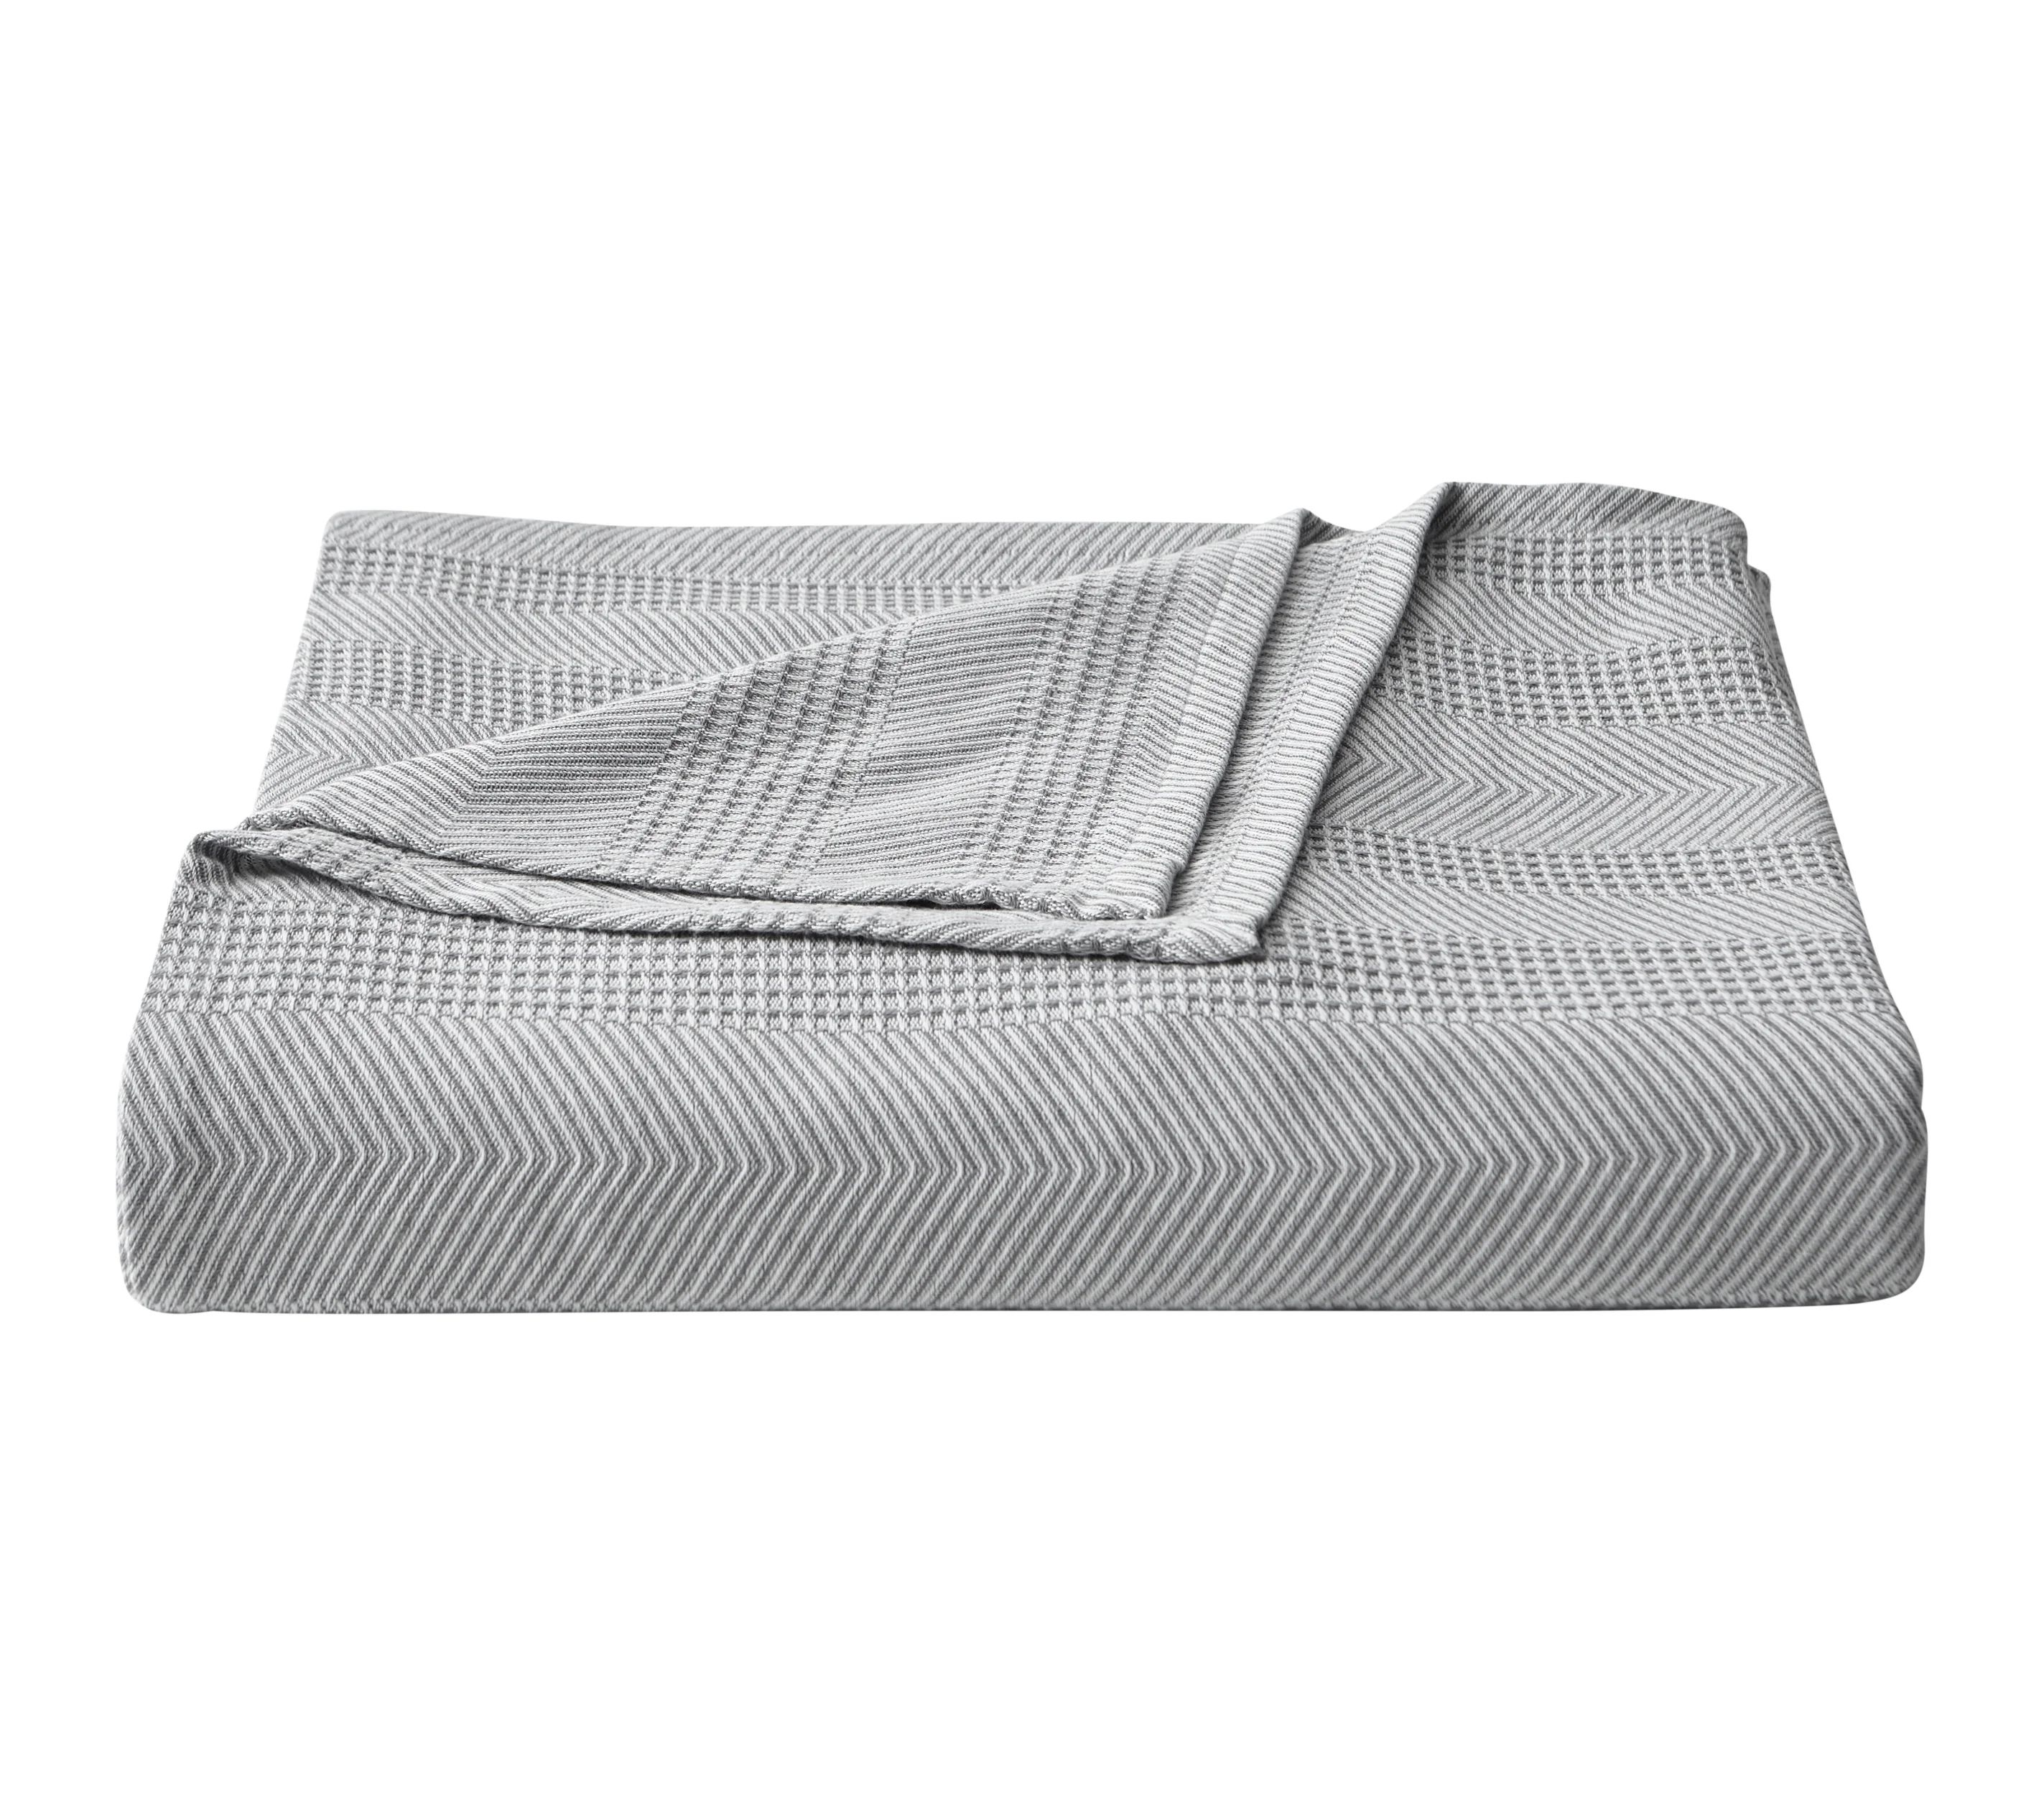 Cotton Blanket | Wayfair Professional